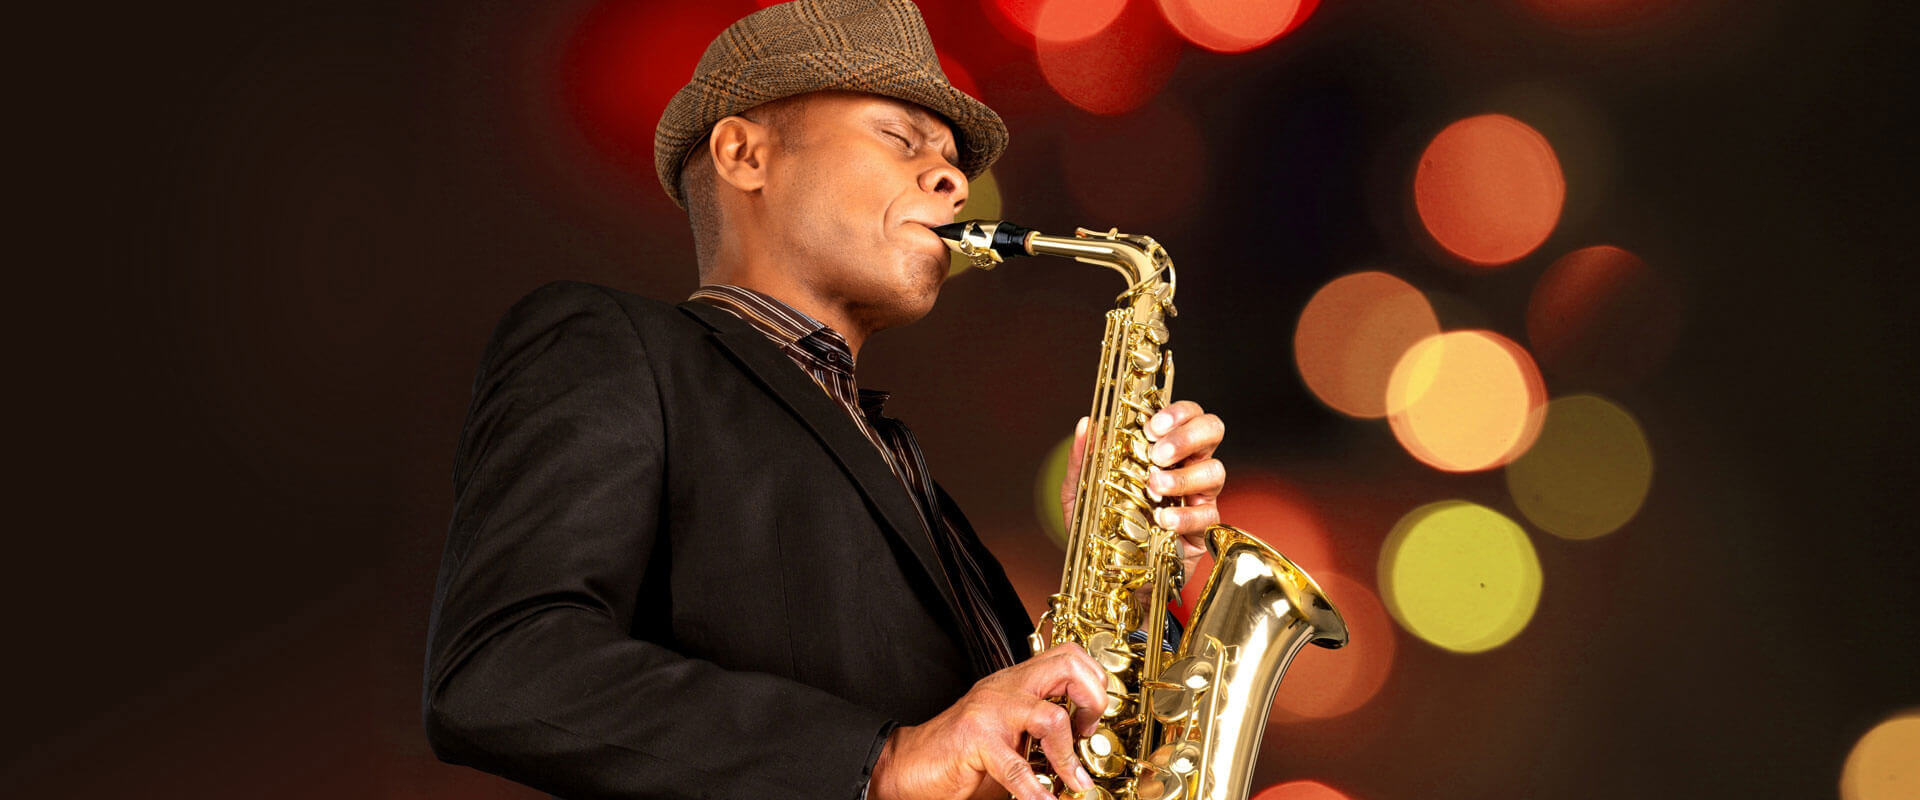 Saxophone Lessons Seahurst, WA